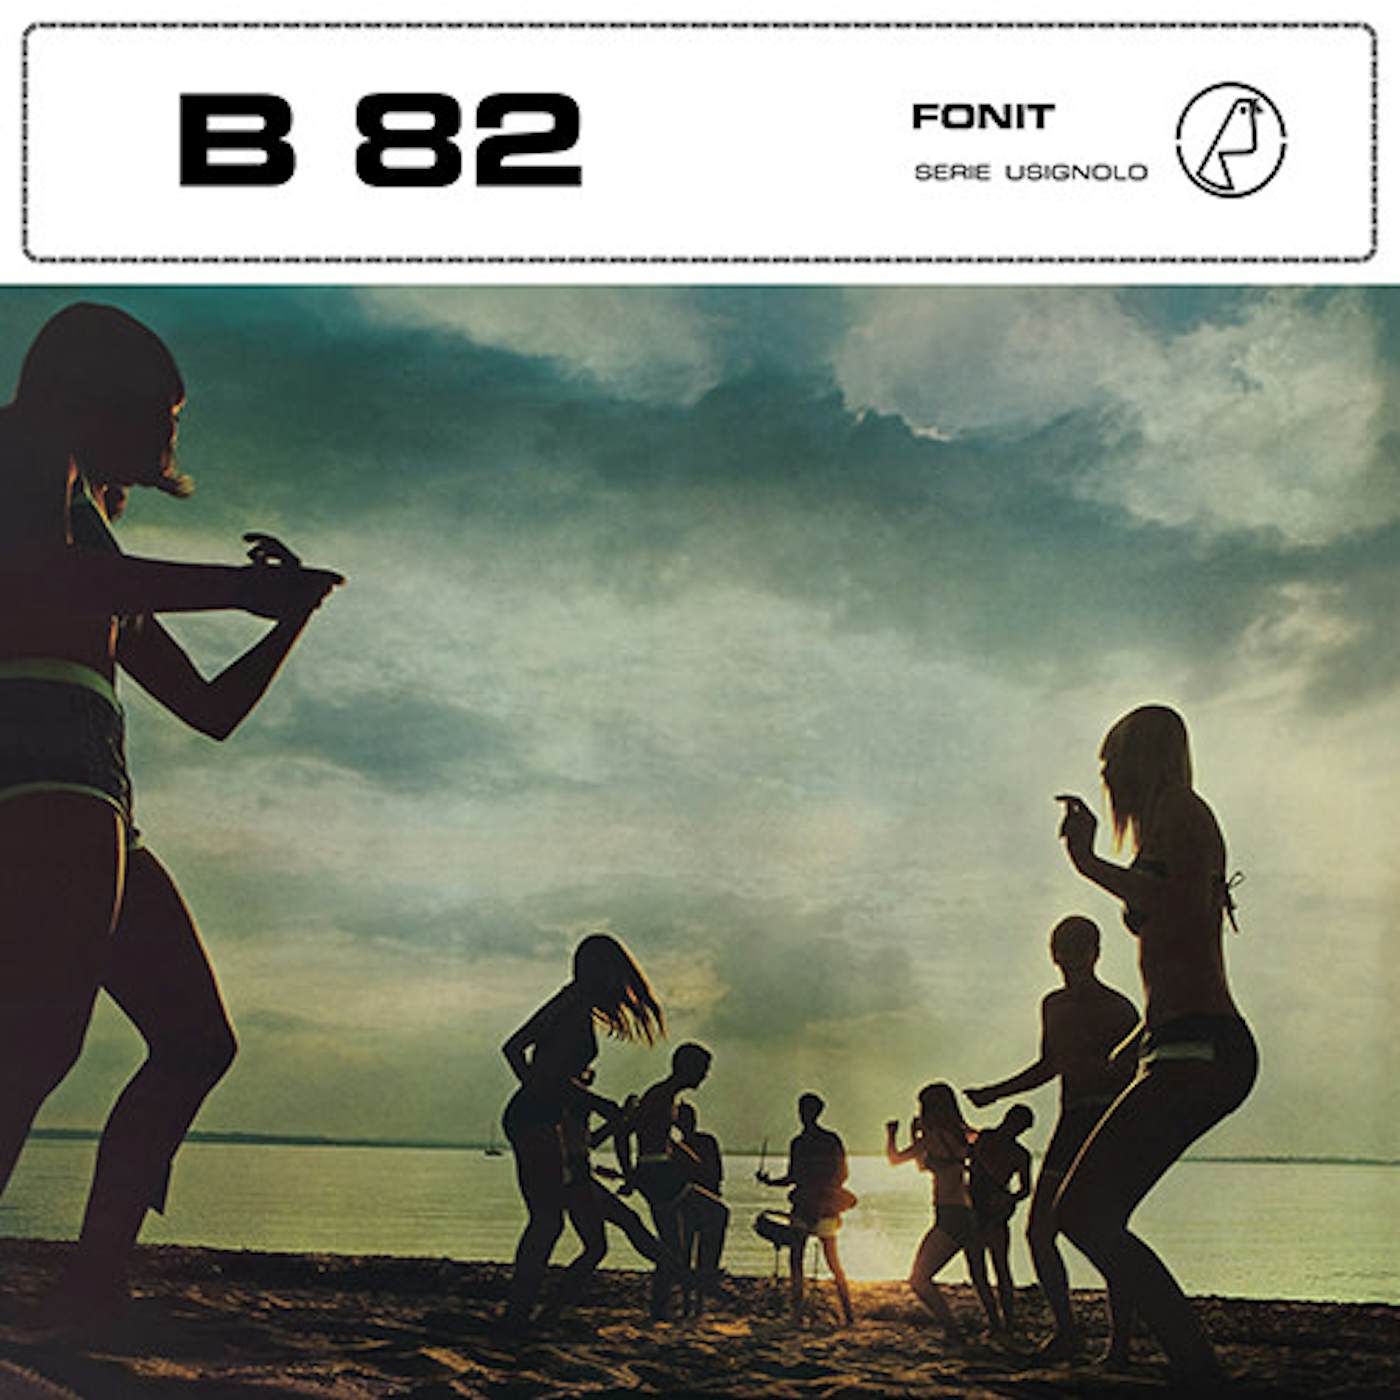 Fabio Fabor B81: BALLABILI ANNI 70 (UNDERGROUND) Vinyl Record